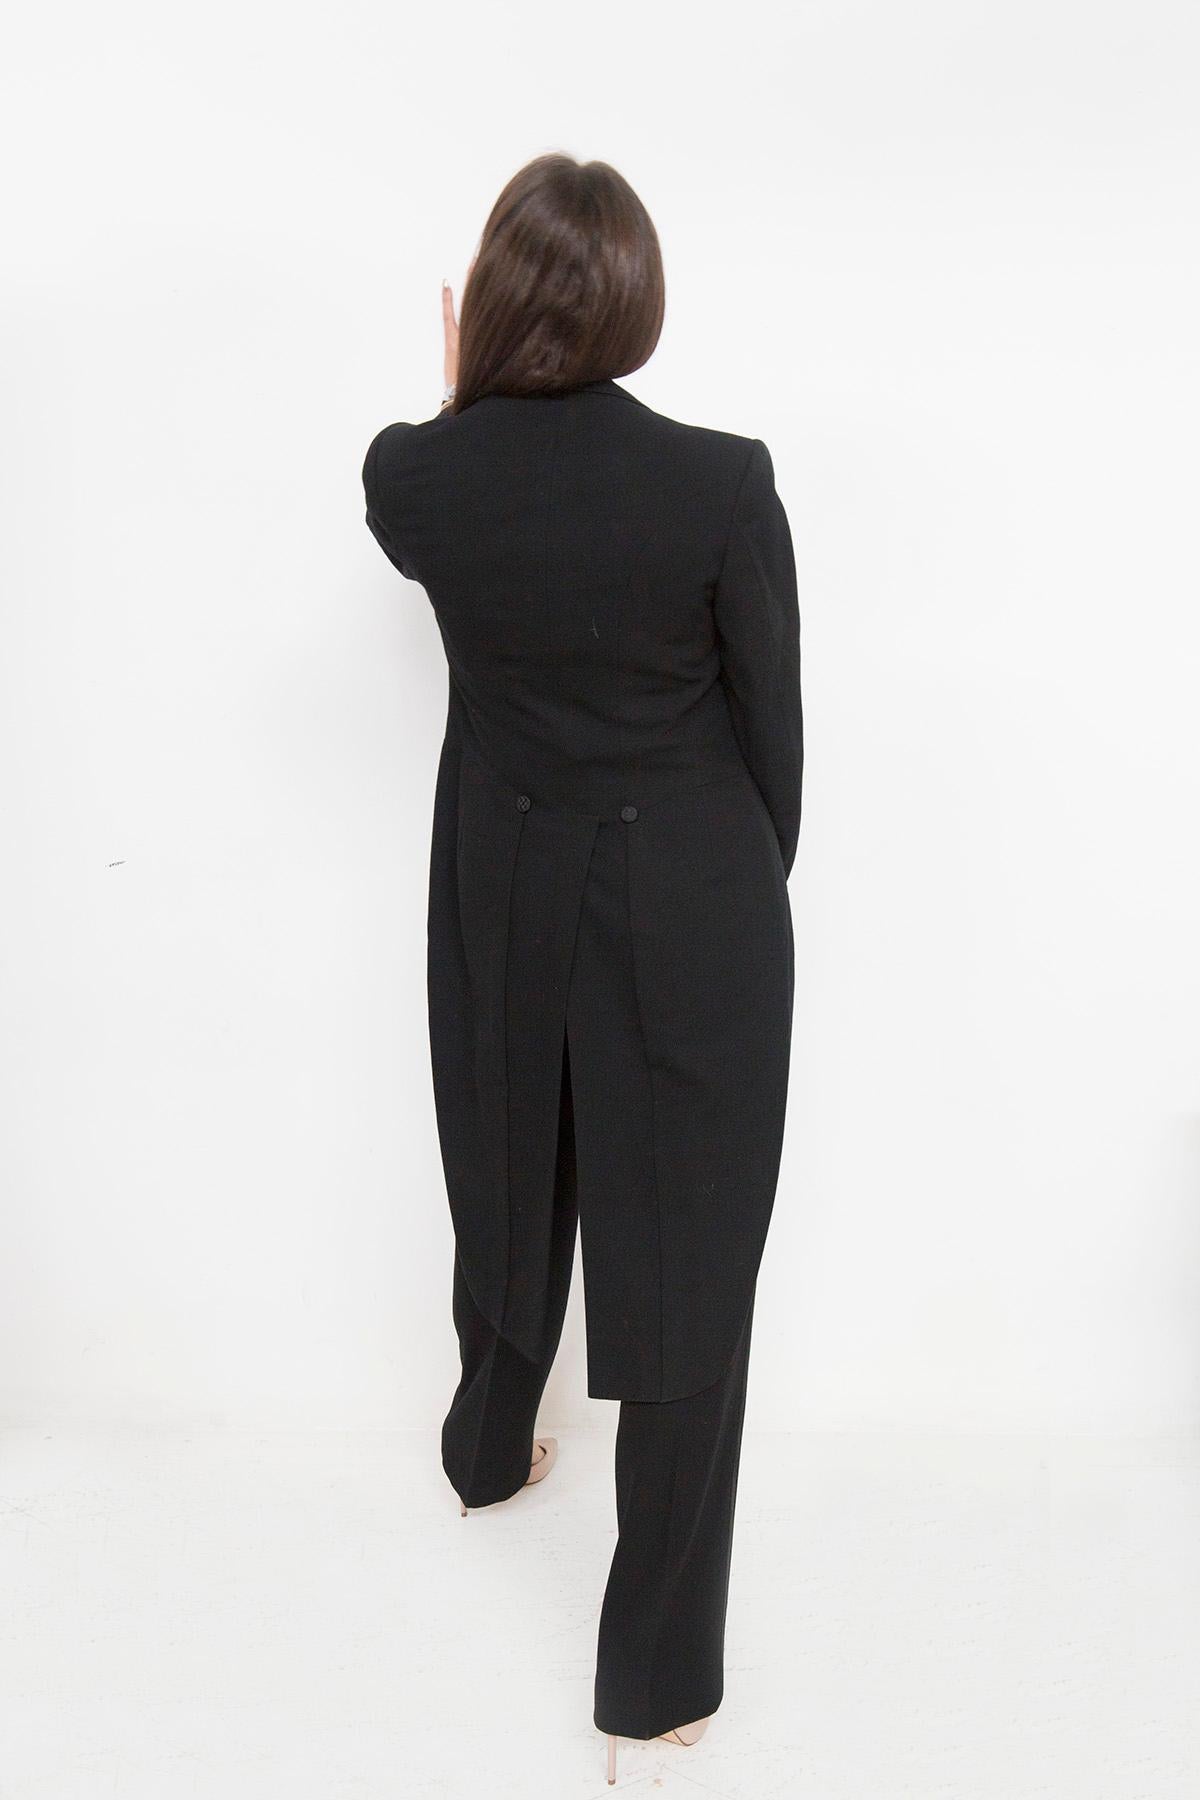 Women's or Men's Very Elegant Vintage Black Tight Suit For Sale